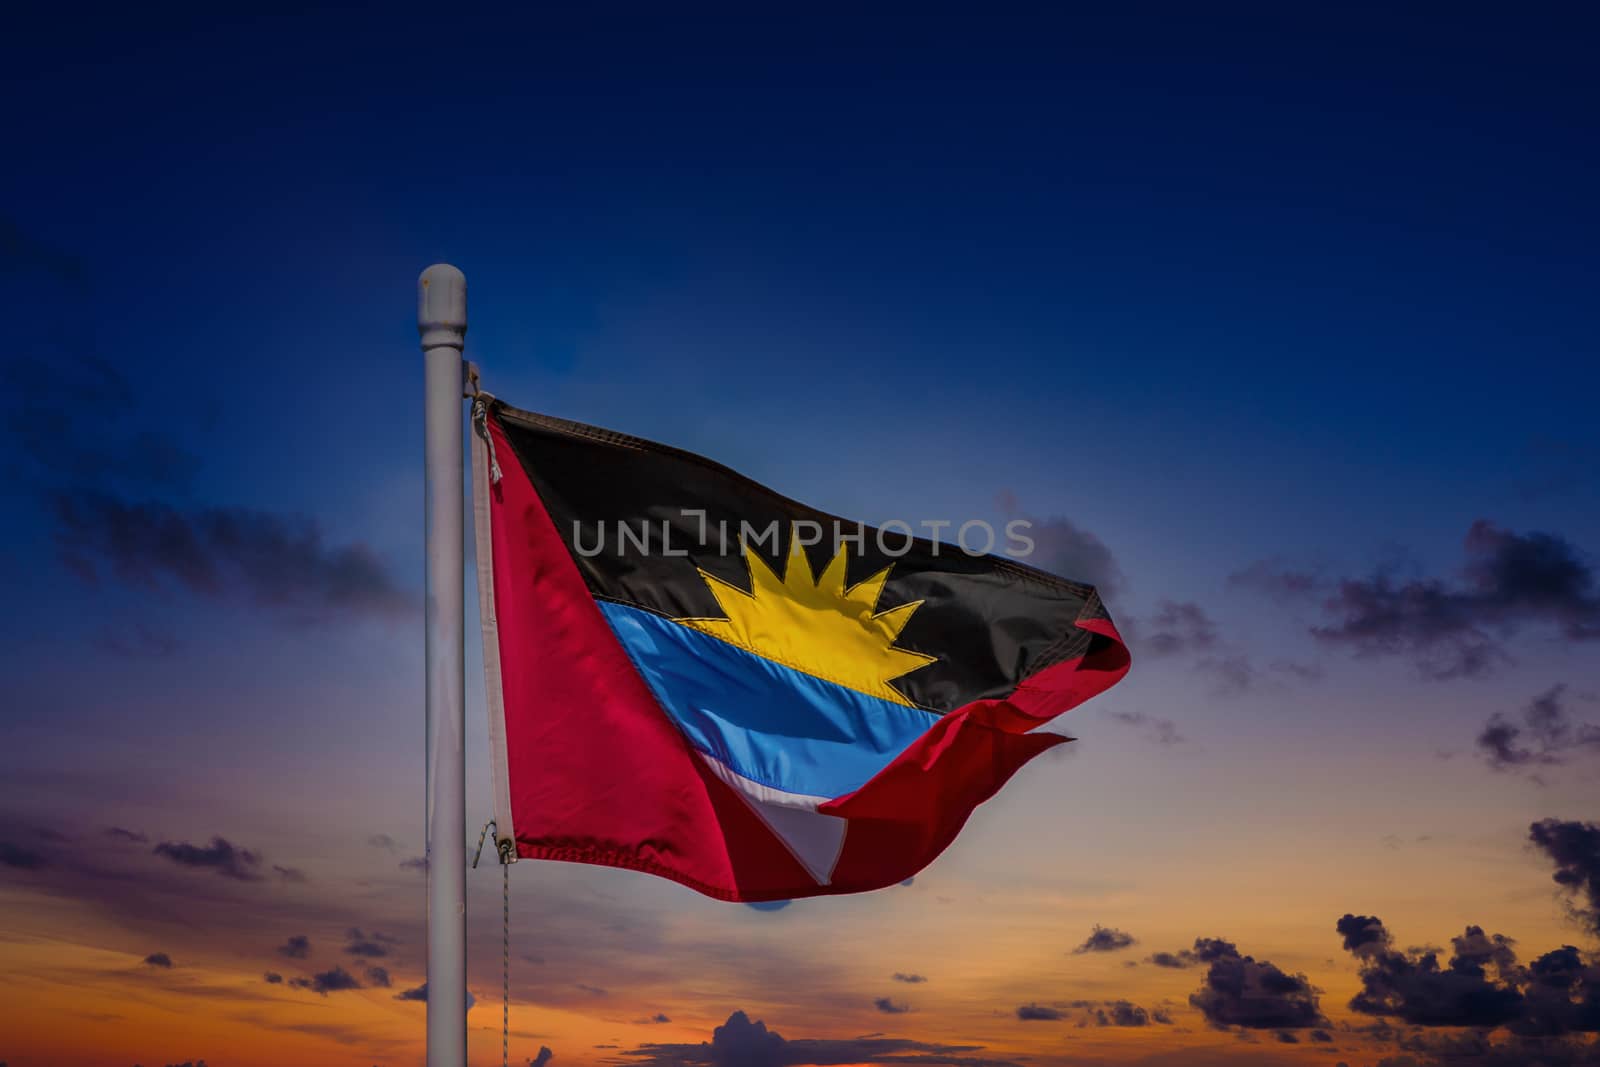 Flag of Antigua In Nelson's Dockyard on Antigua